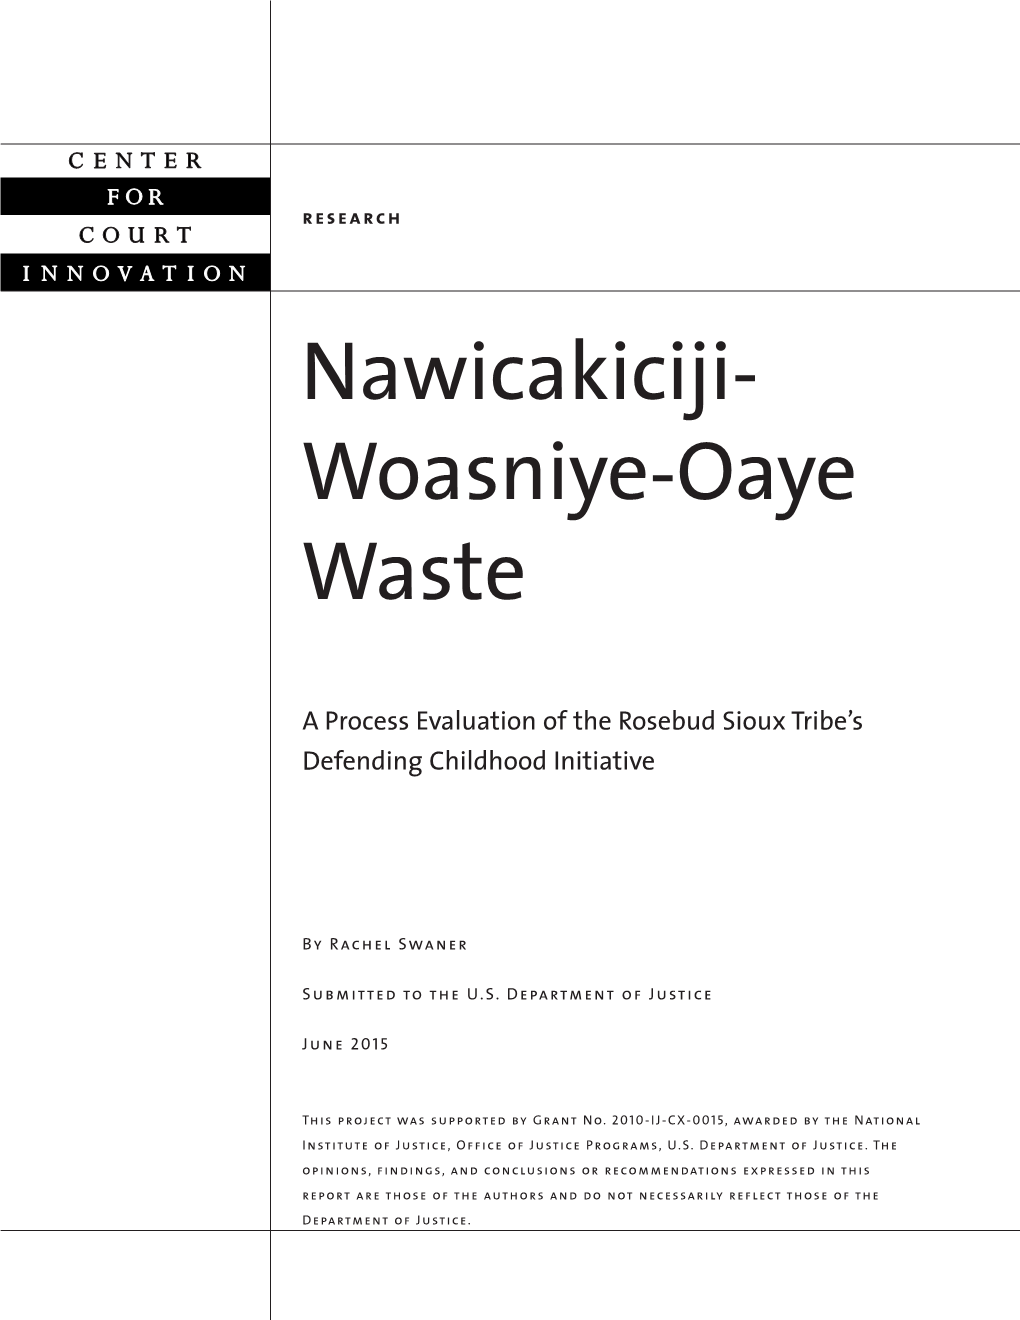 Nawicakiciji- Woasniye-Oaye Waste